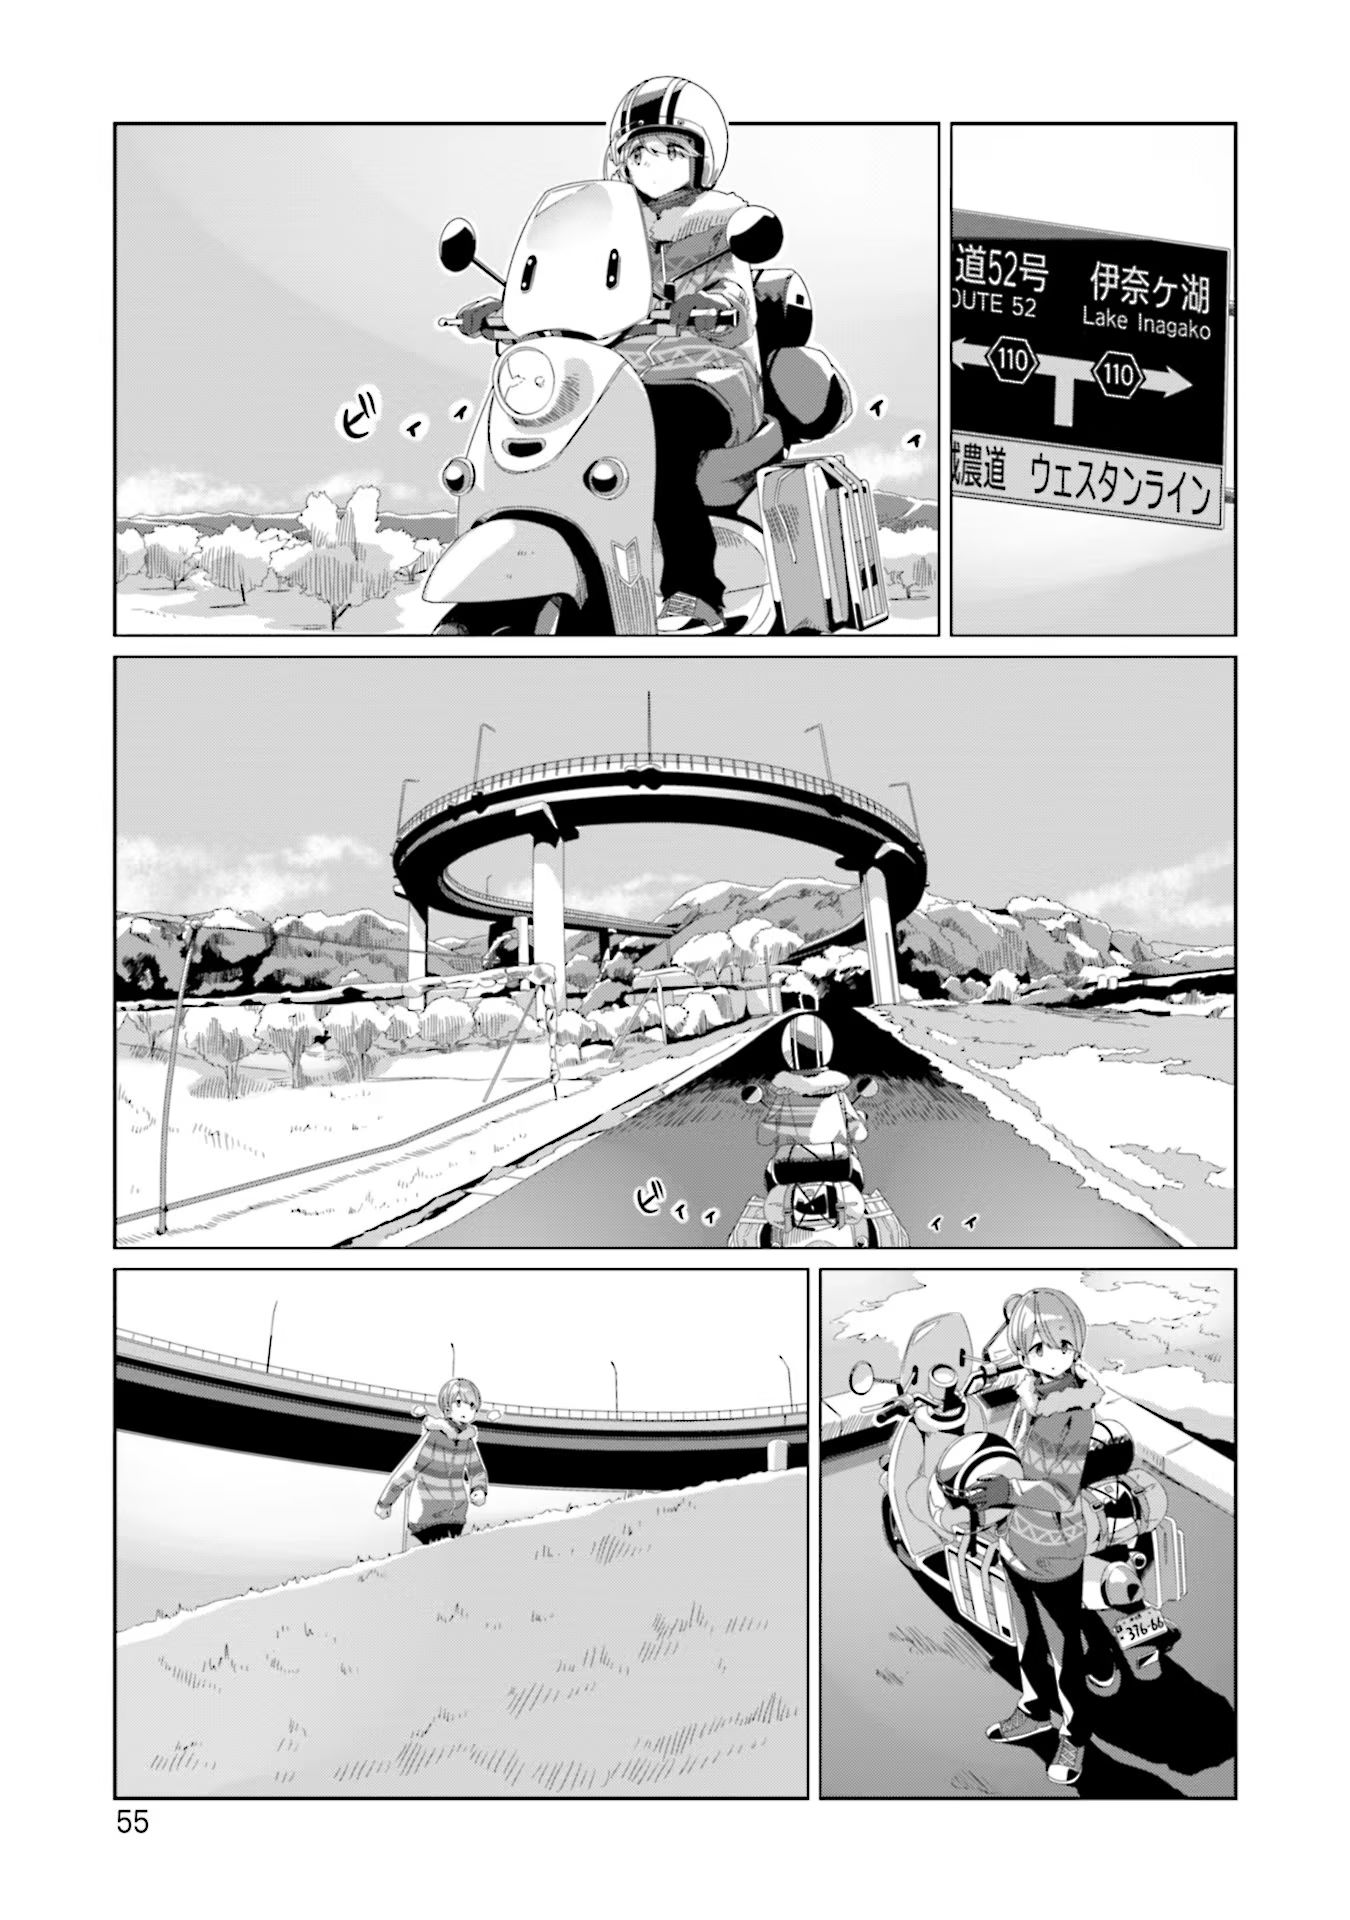 Yuru Camp - Chapter 72 - Page 1